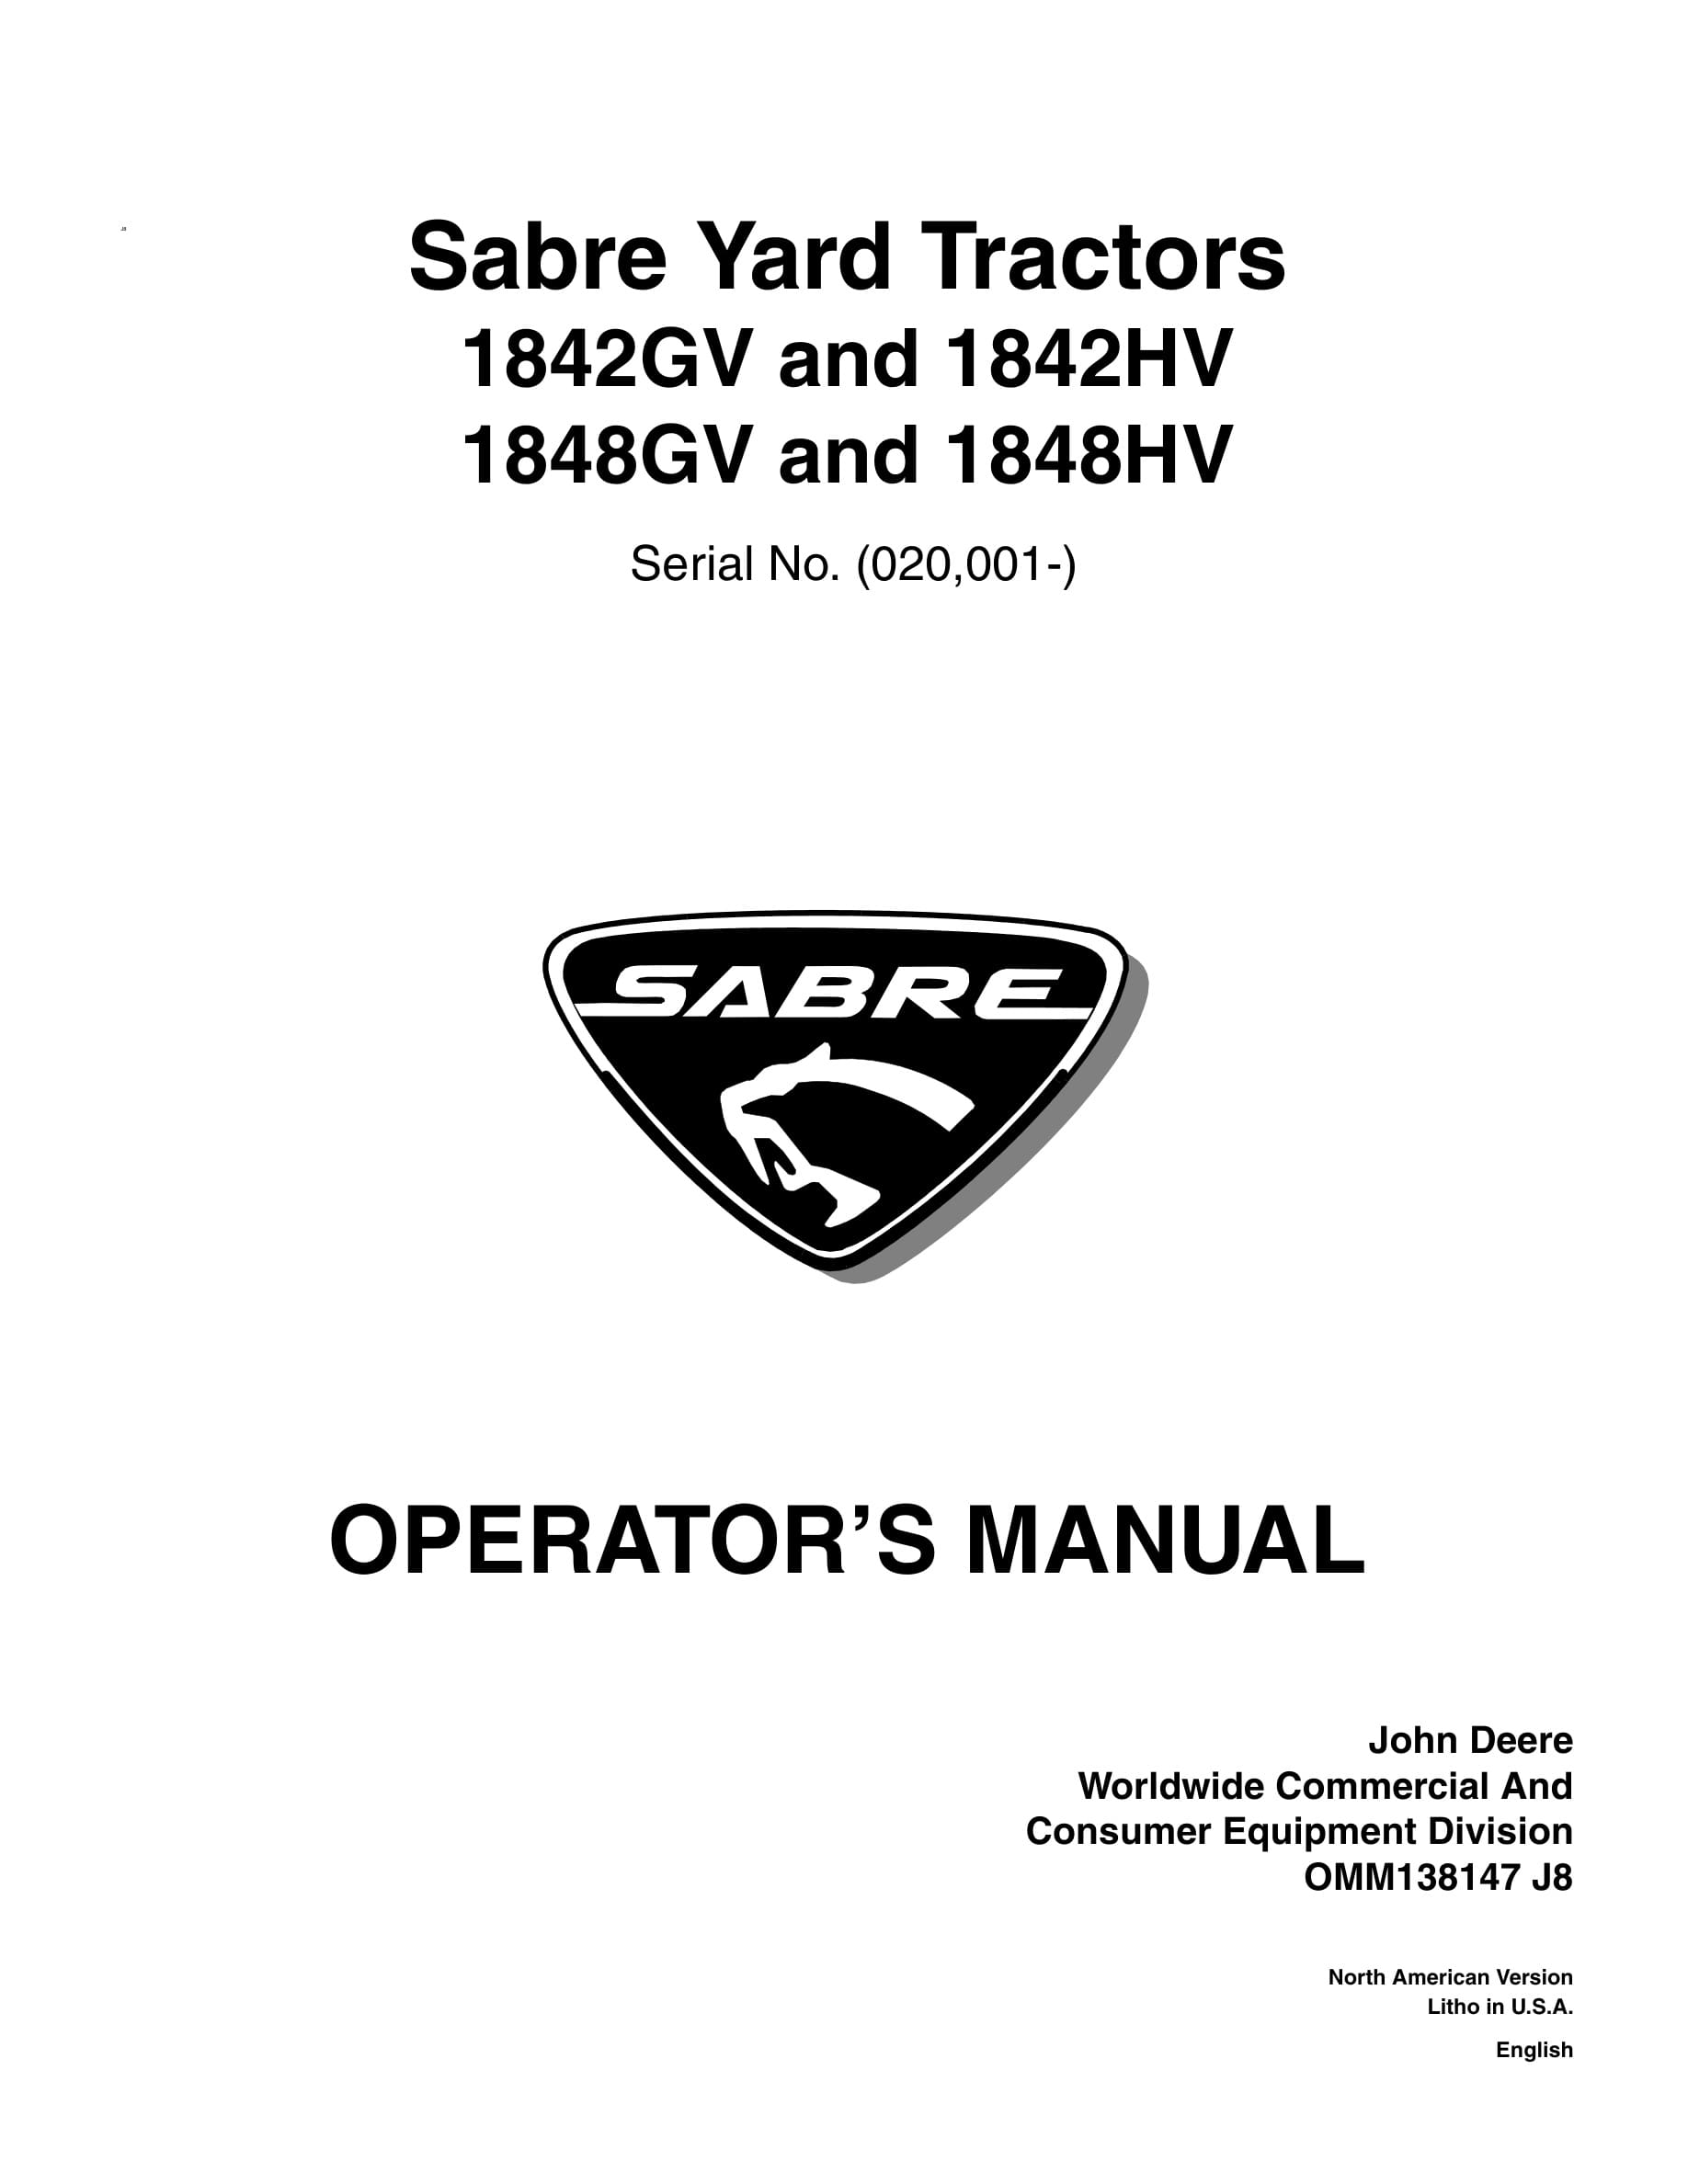 John Deere 1842GV and 1842HV 1848GV and 1848HV Tractor Operator Manual OMM138147-1